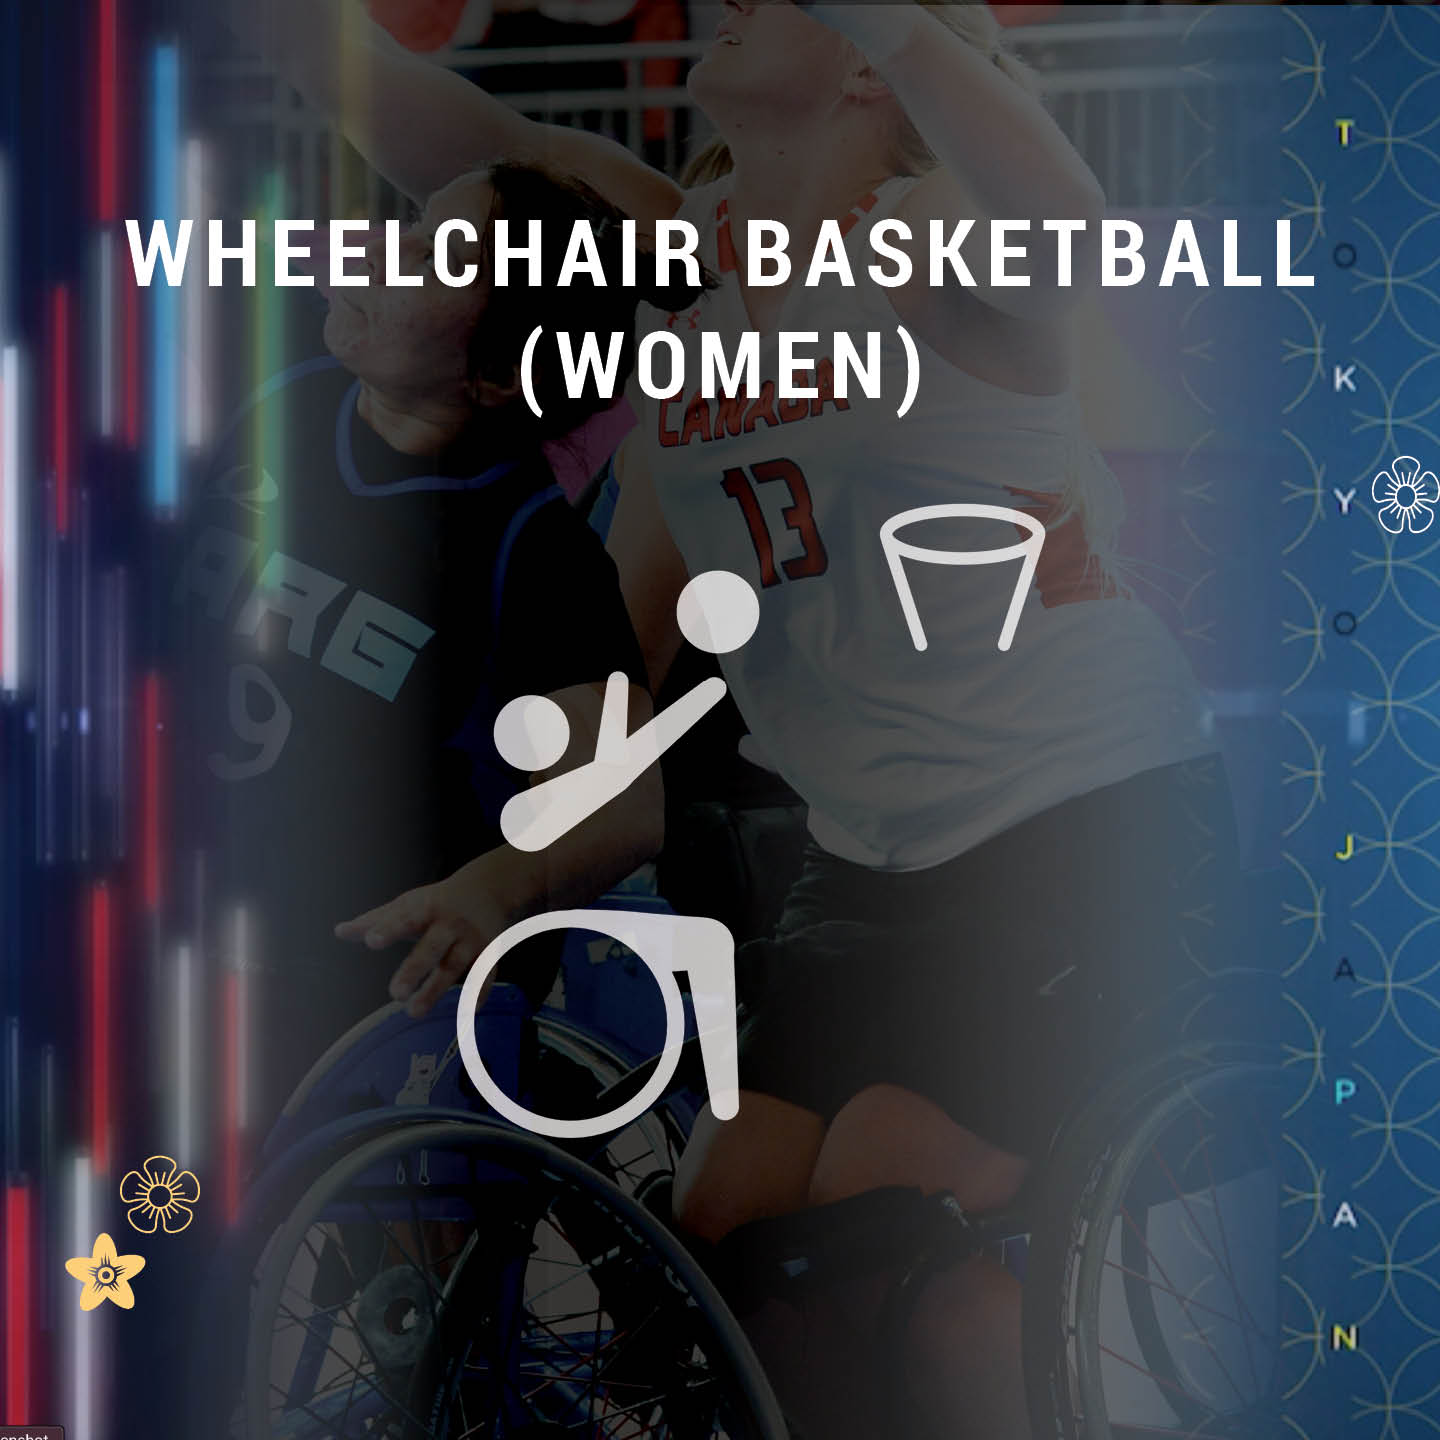 Wheelchair Basketball Women Live Stream and Video on Demand